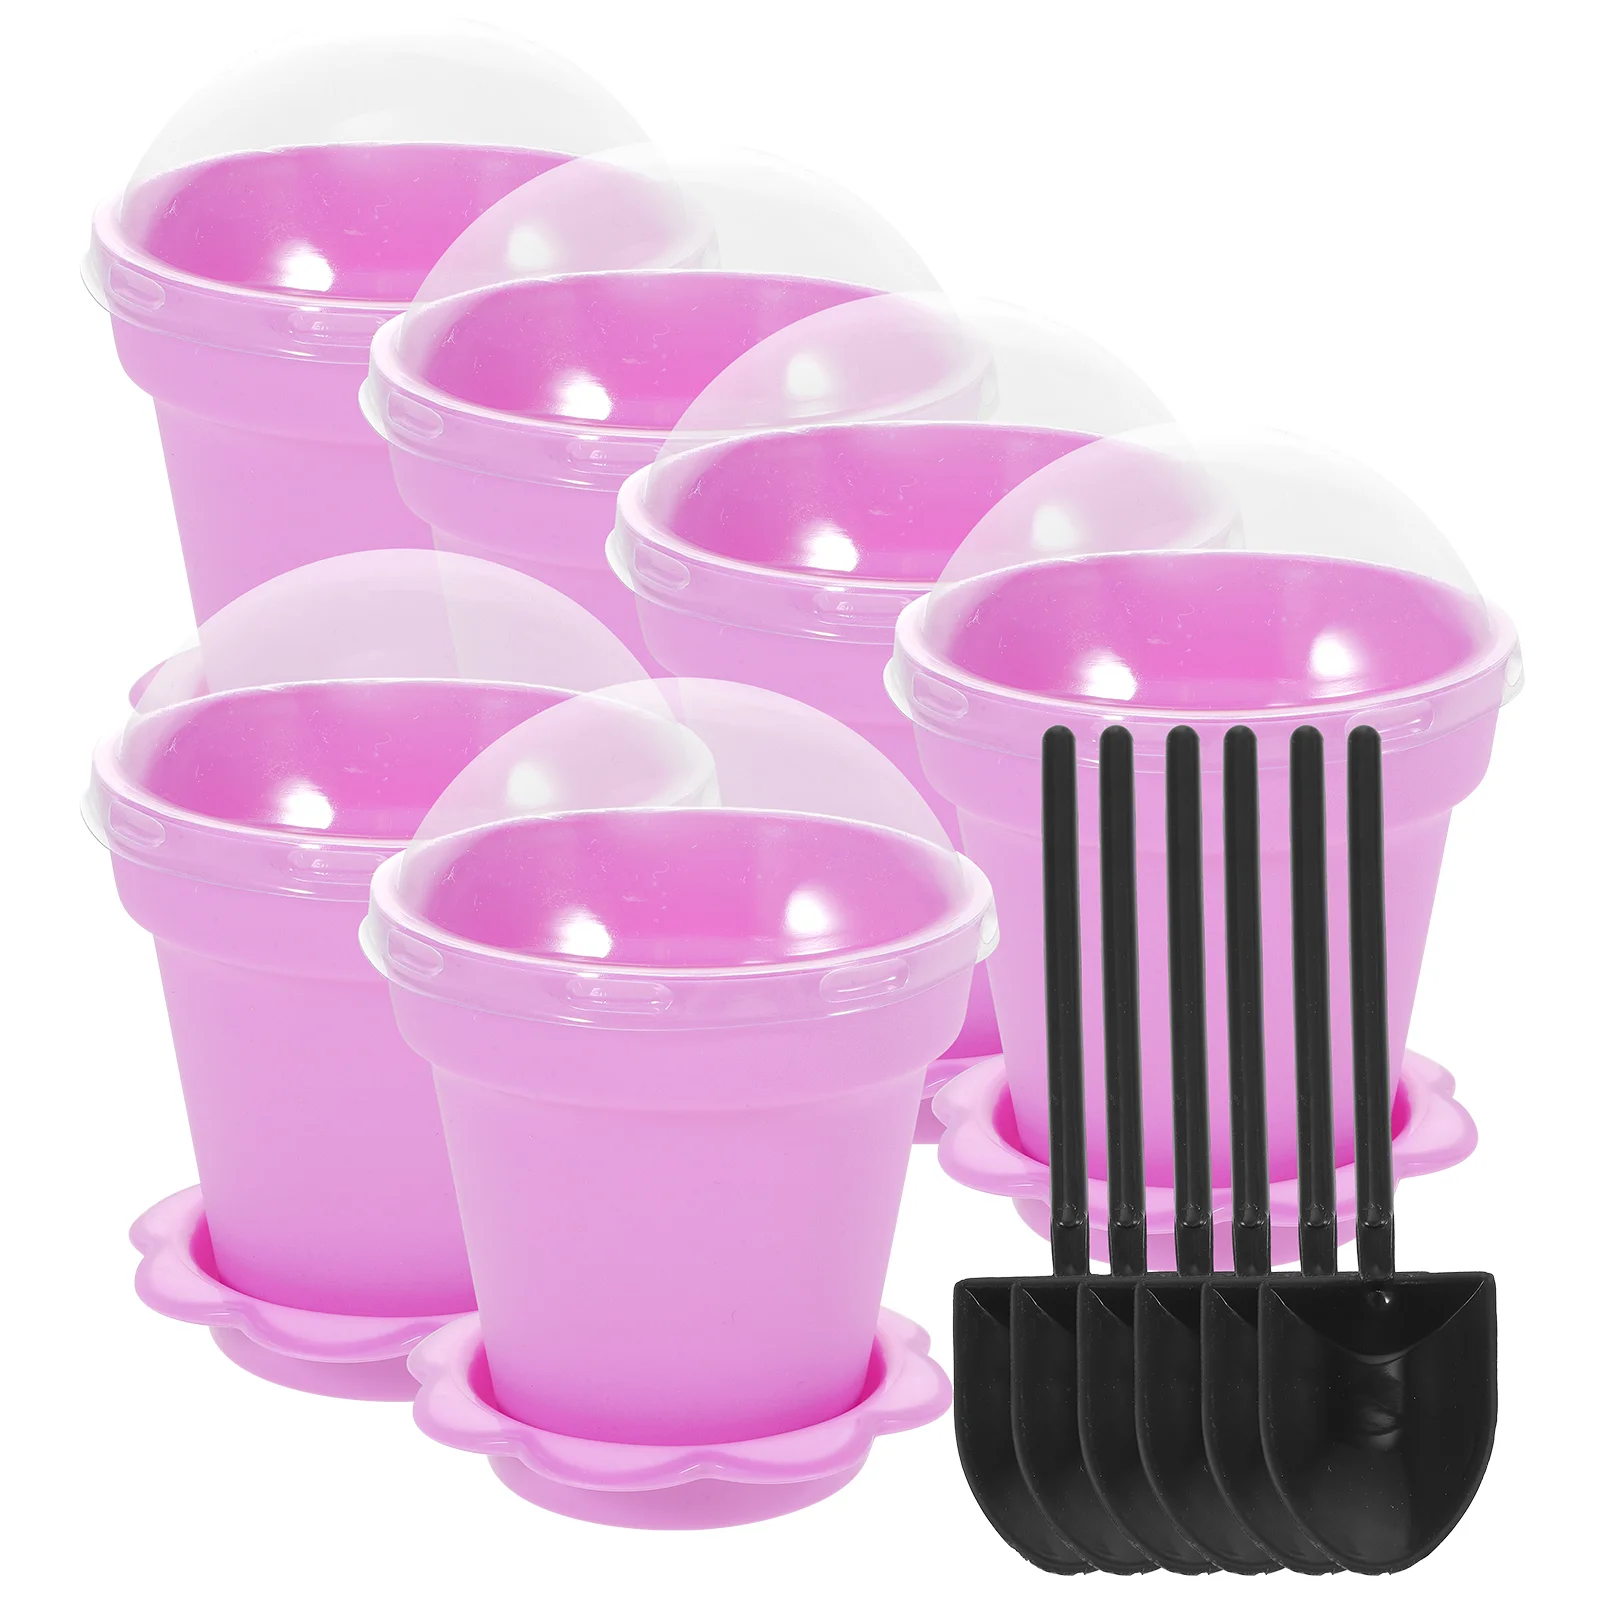 

Planter Cake Cups Plastic Terrarium Flower Pots Container Ice Cream Bowls Home Supplies Sundae Nursery